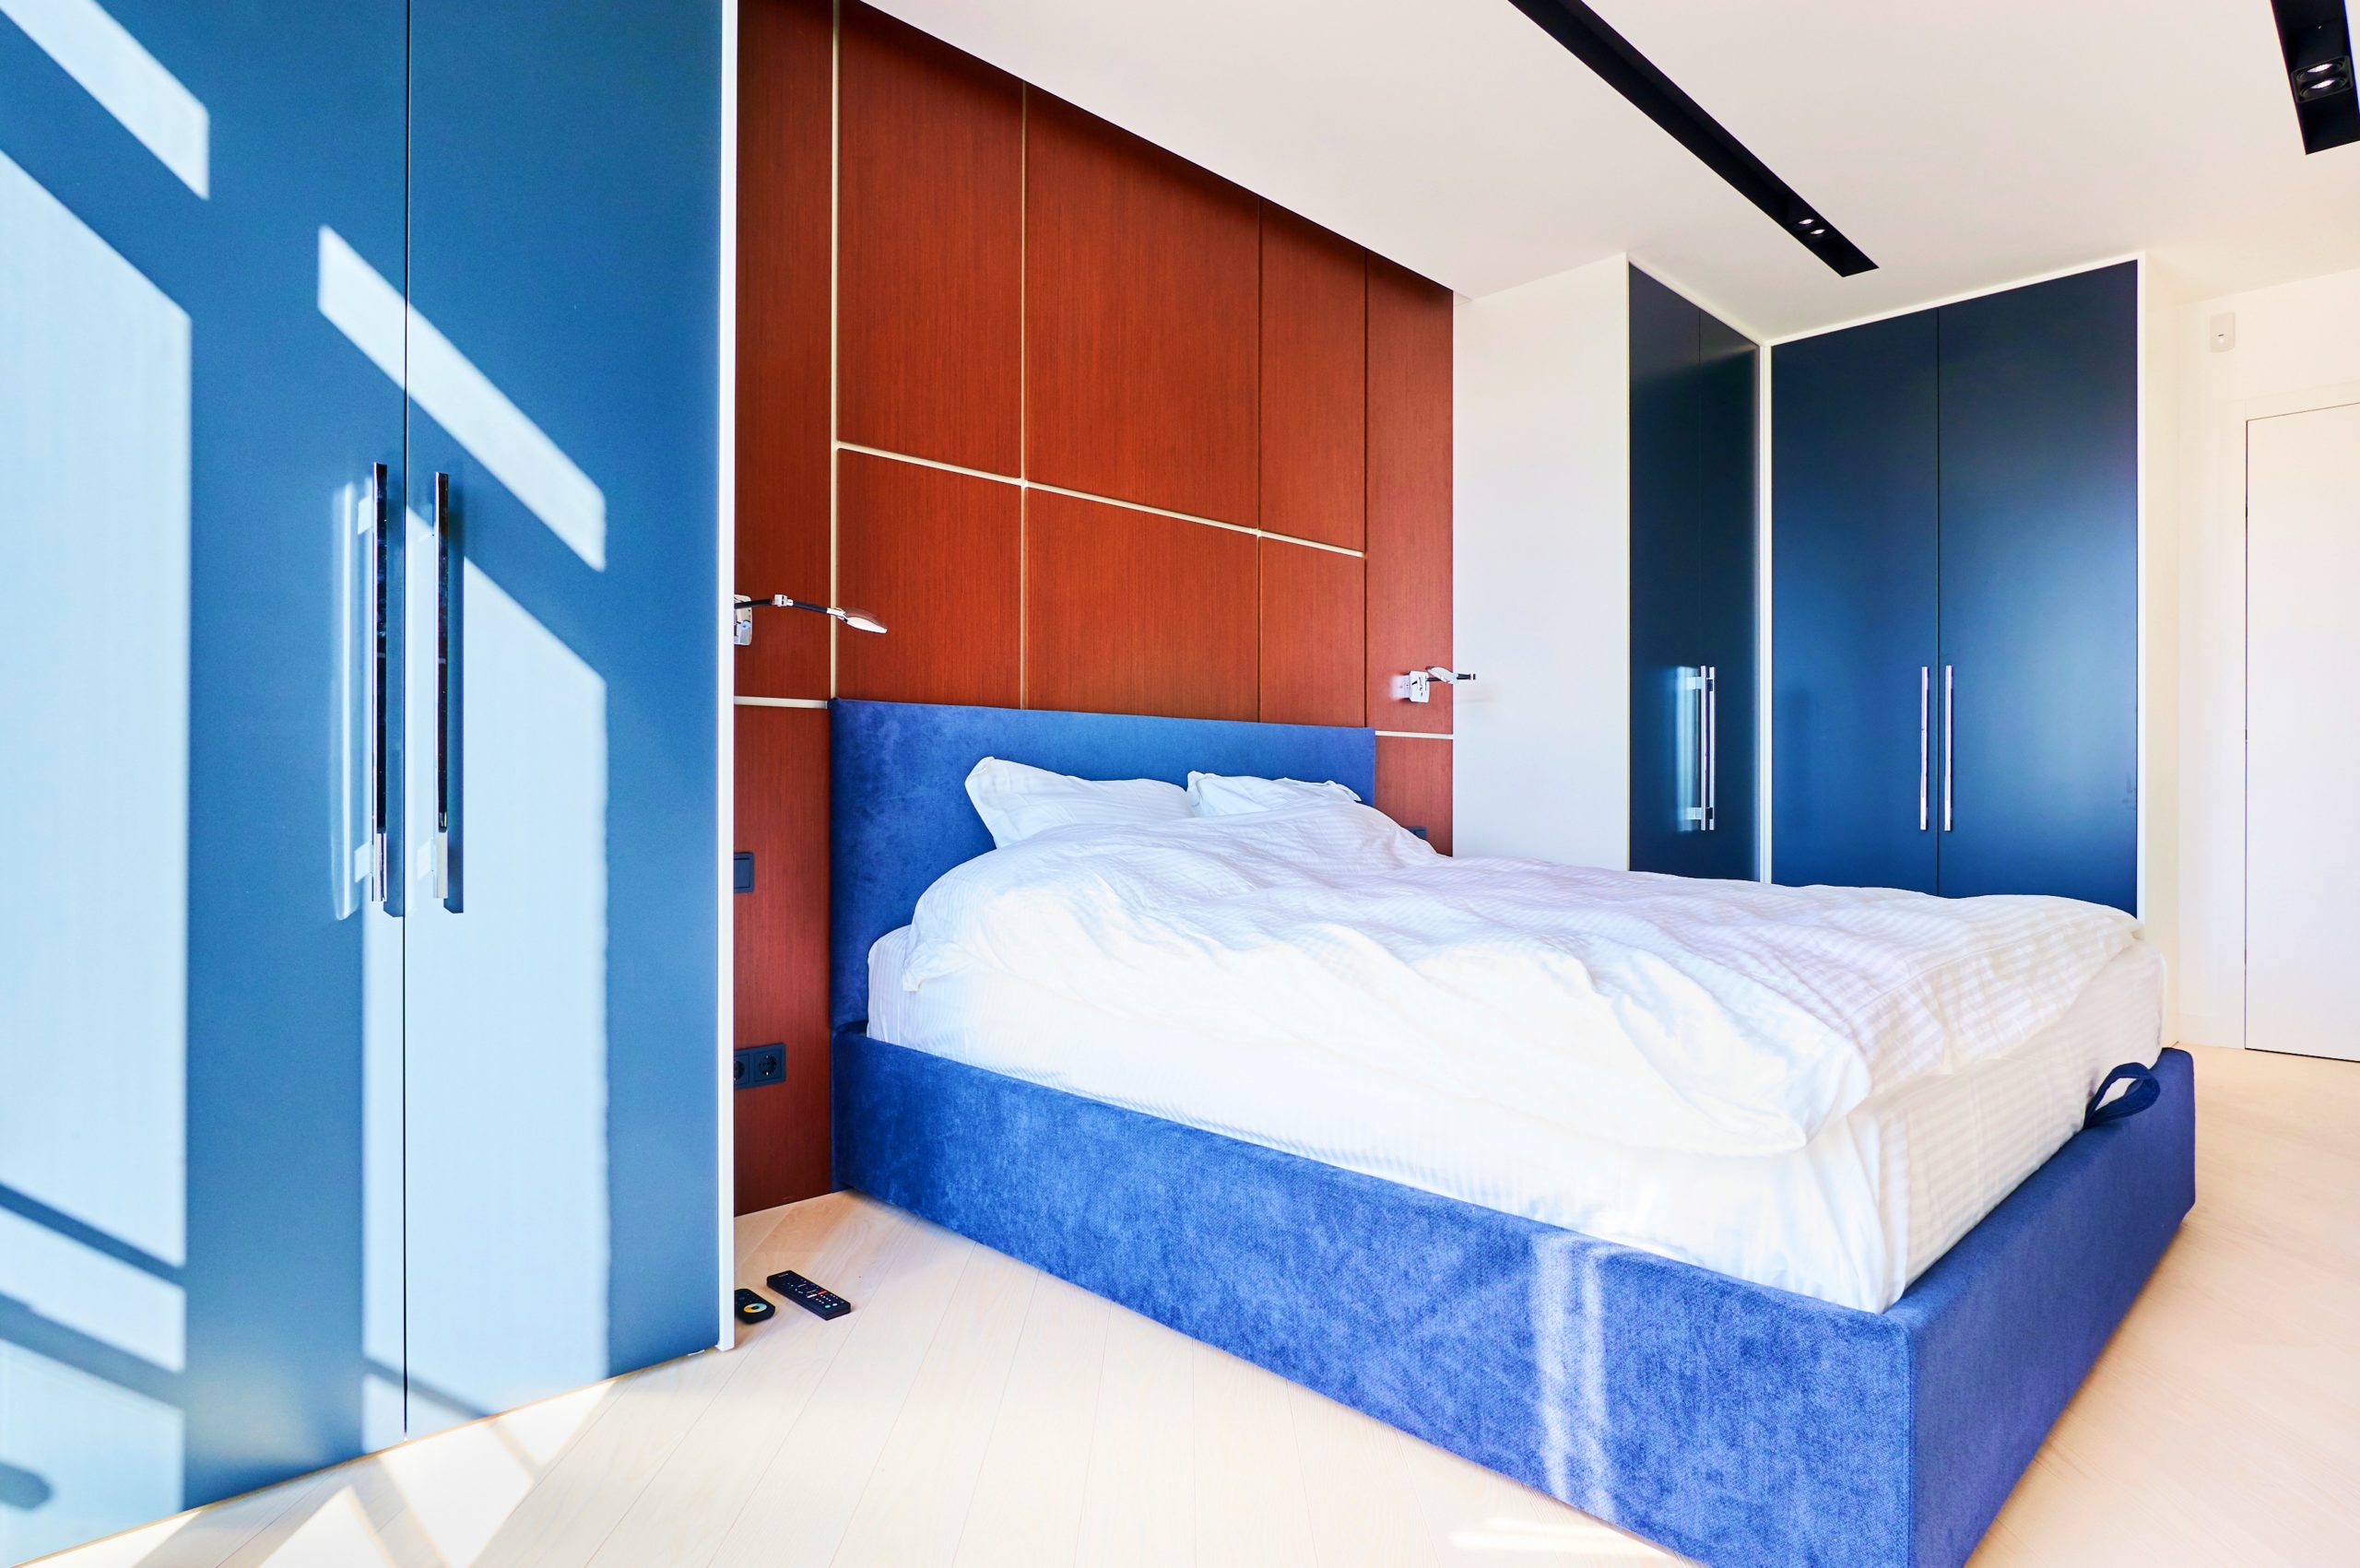 <img src="bedroom.jpg" alt="bedroom with blue fitted wardrobe"/> 